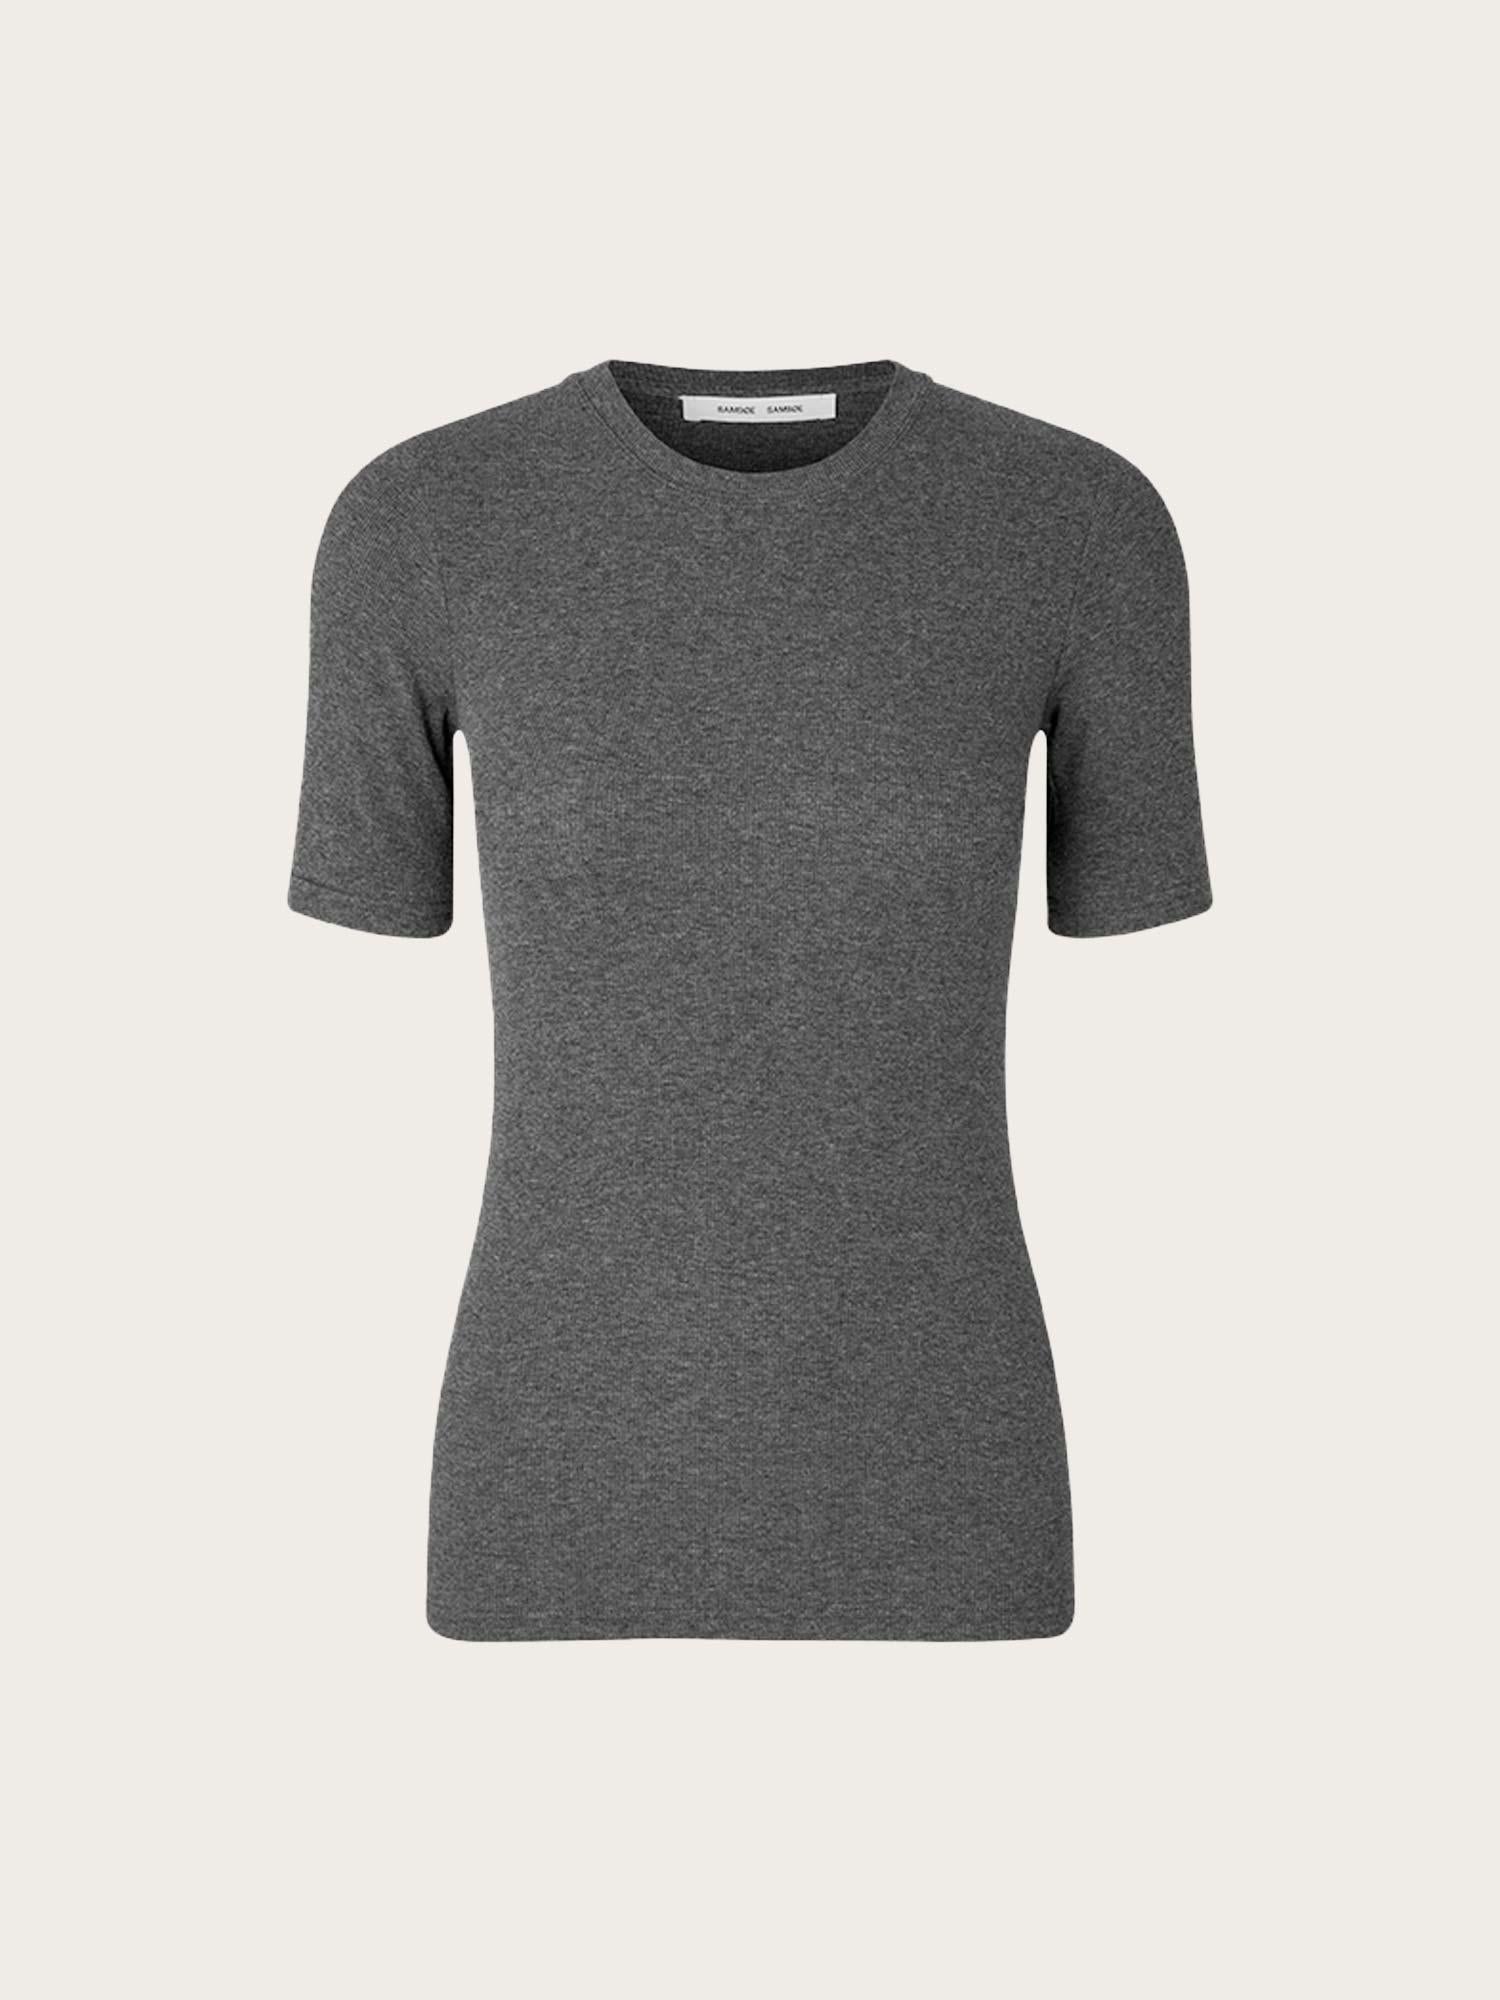 Saalexo T-Shirt - Dark Grey Melange